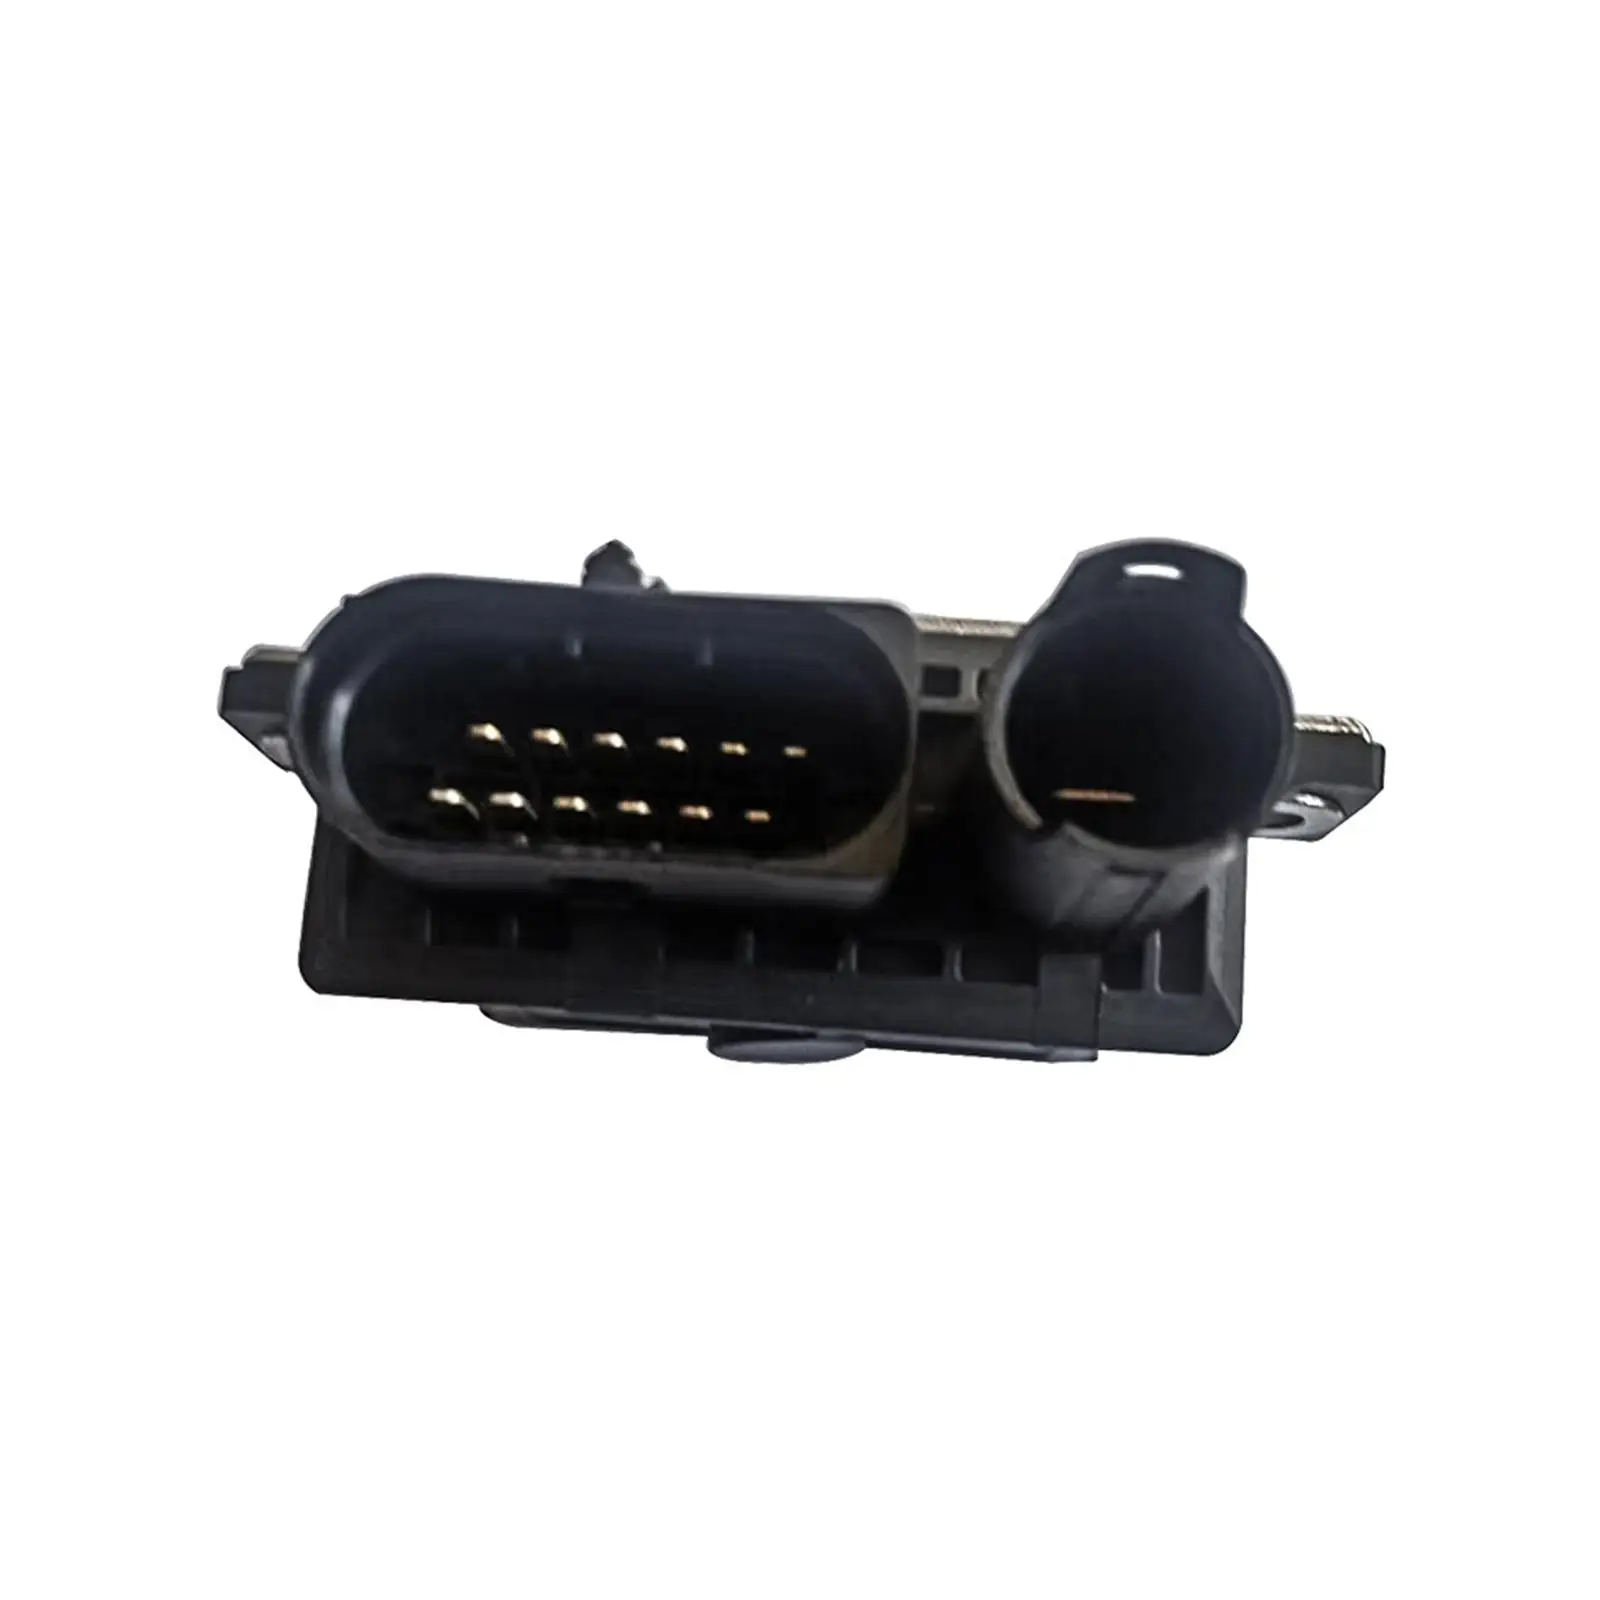 Car Glow Plug Control Unit Relay Module, 12217801201 12217786821 for 330D E46 530D E61